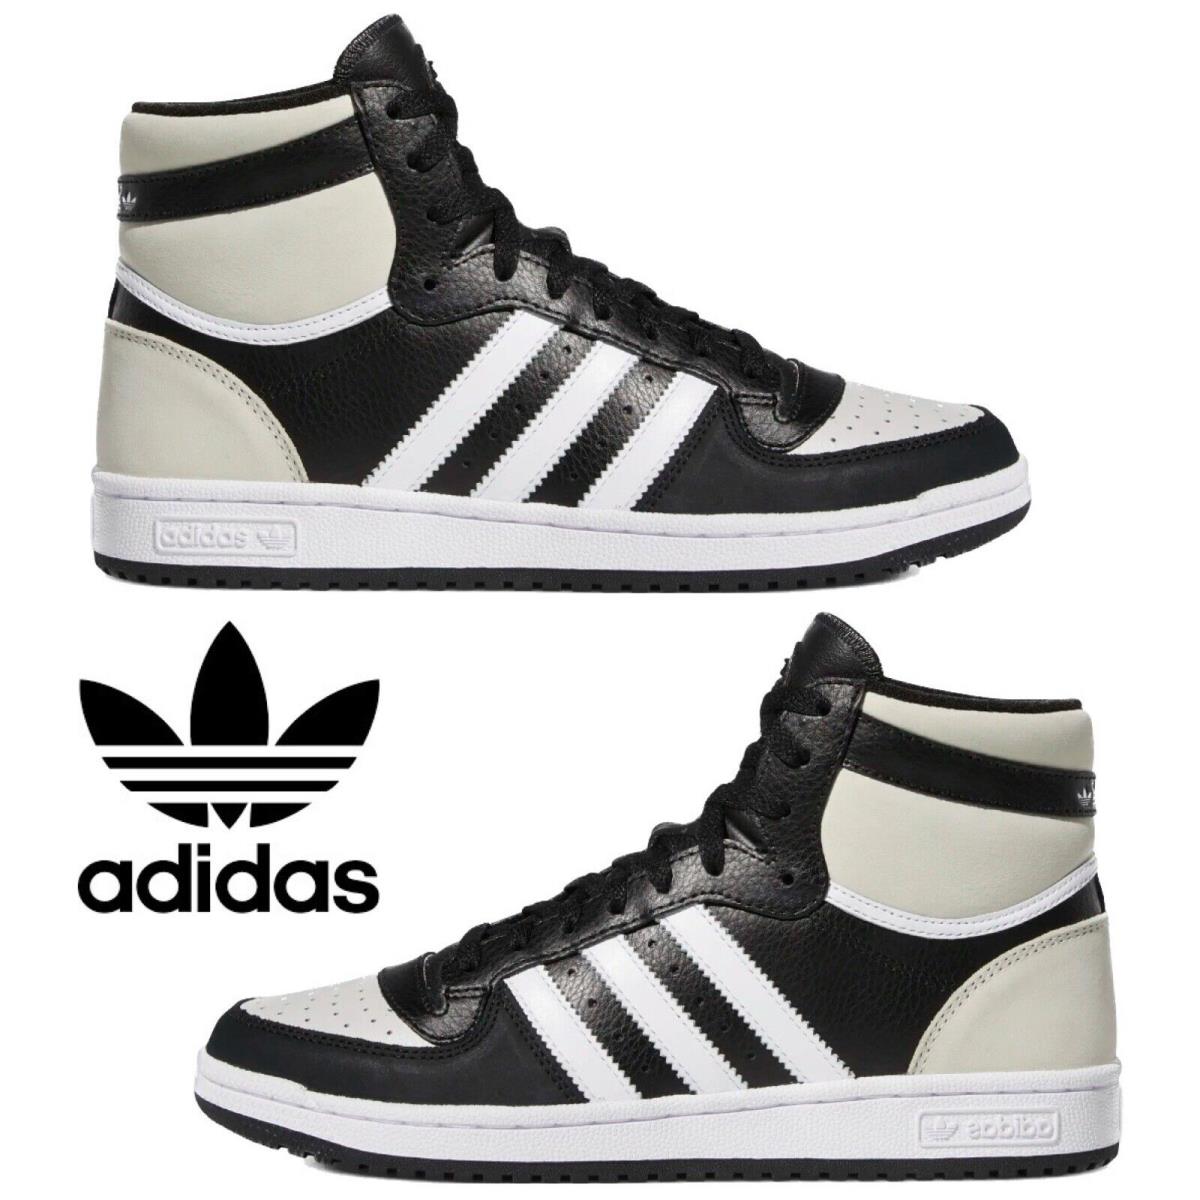 Adidas Originals Top Ten RB Men`s Sneakers Comfort Casual Shoes High Top Black - Black , Core Black / Cloud White / Grey One Manufacturer